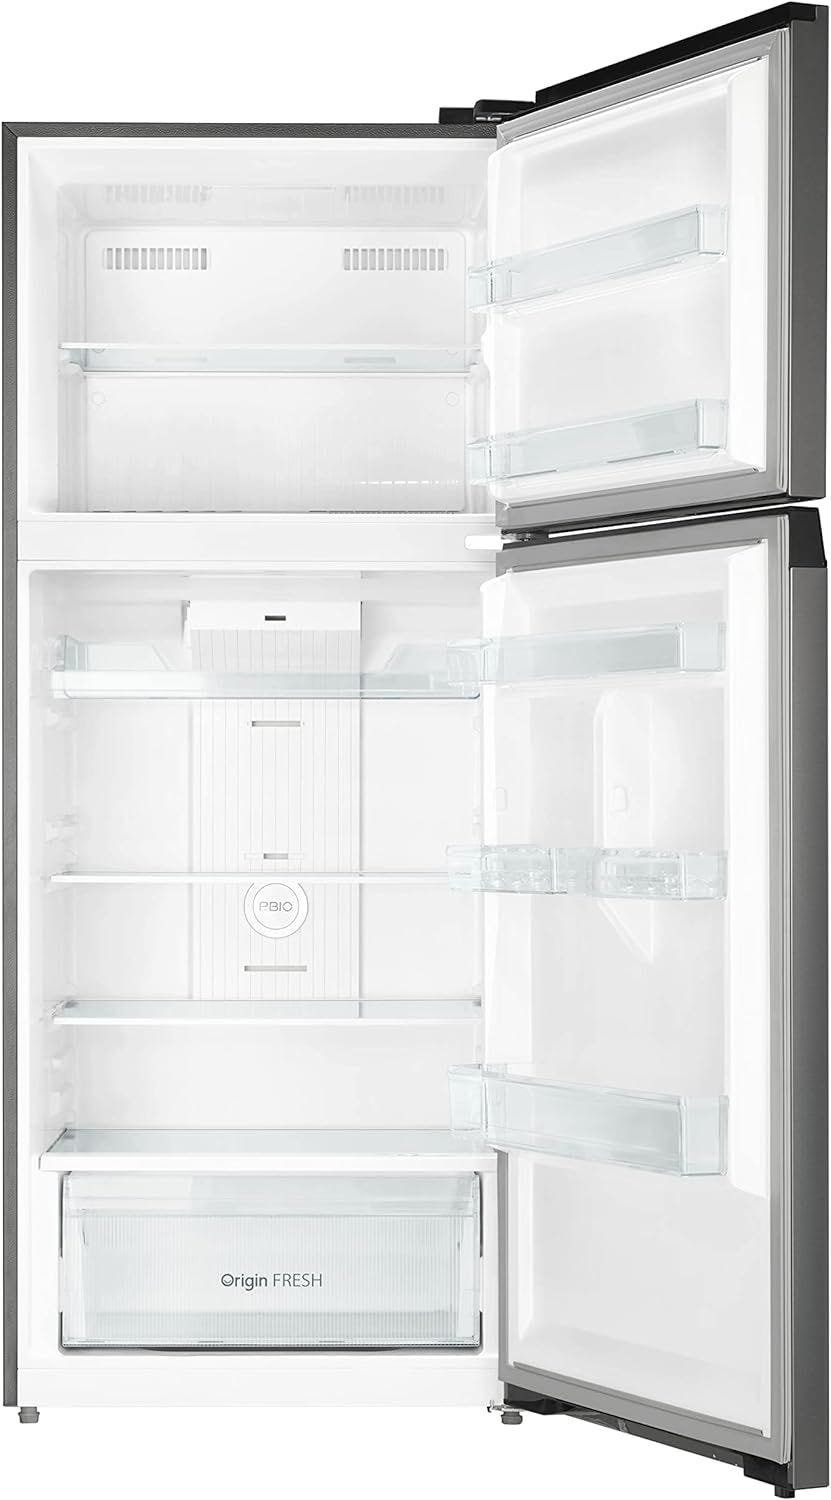 Toshiba No Frost Refrigerator, 411 Liters, Silver - GRRT559WEDMN49